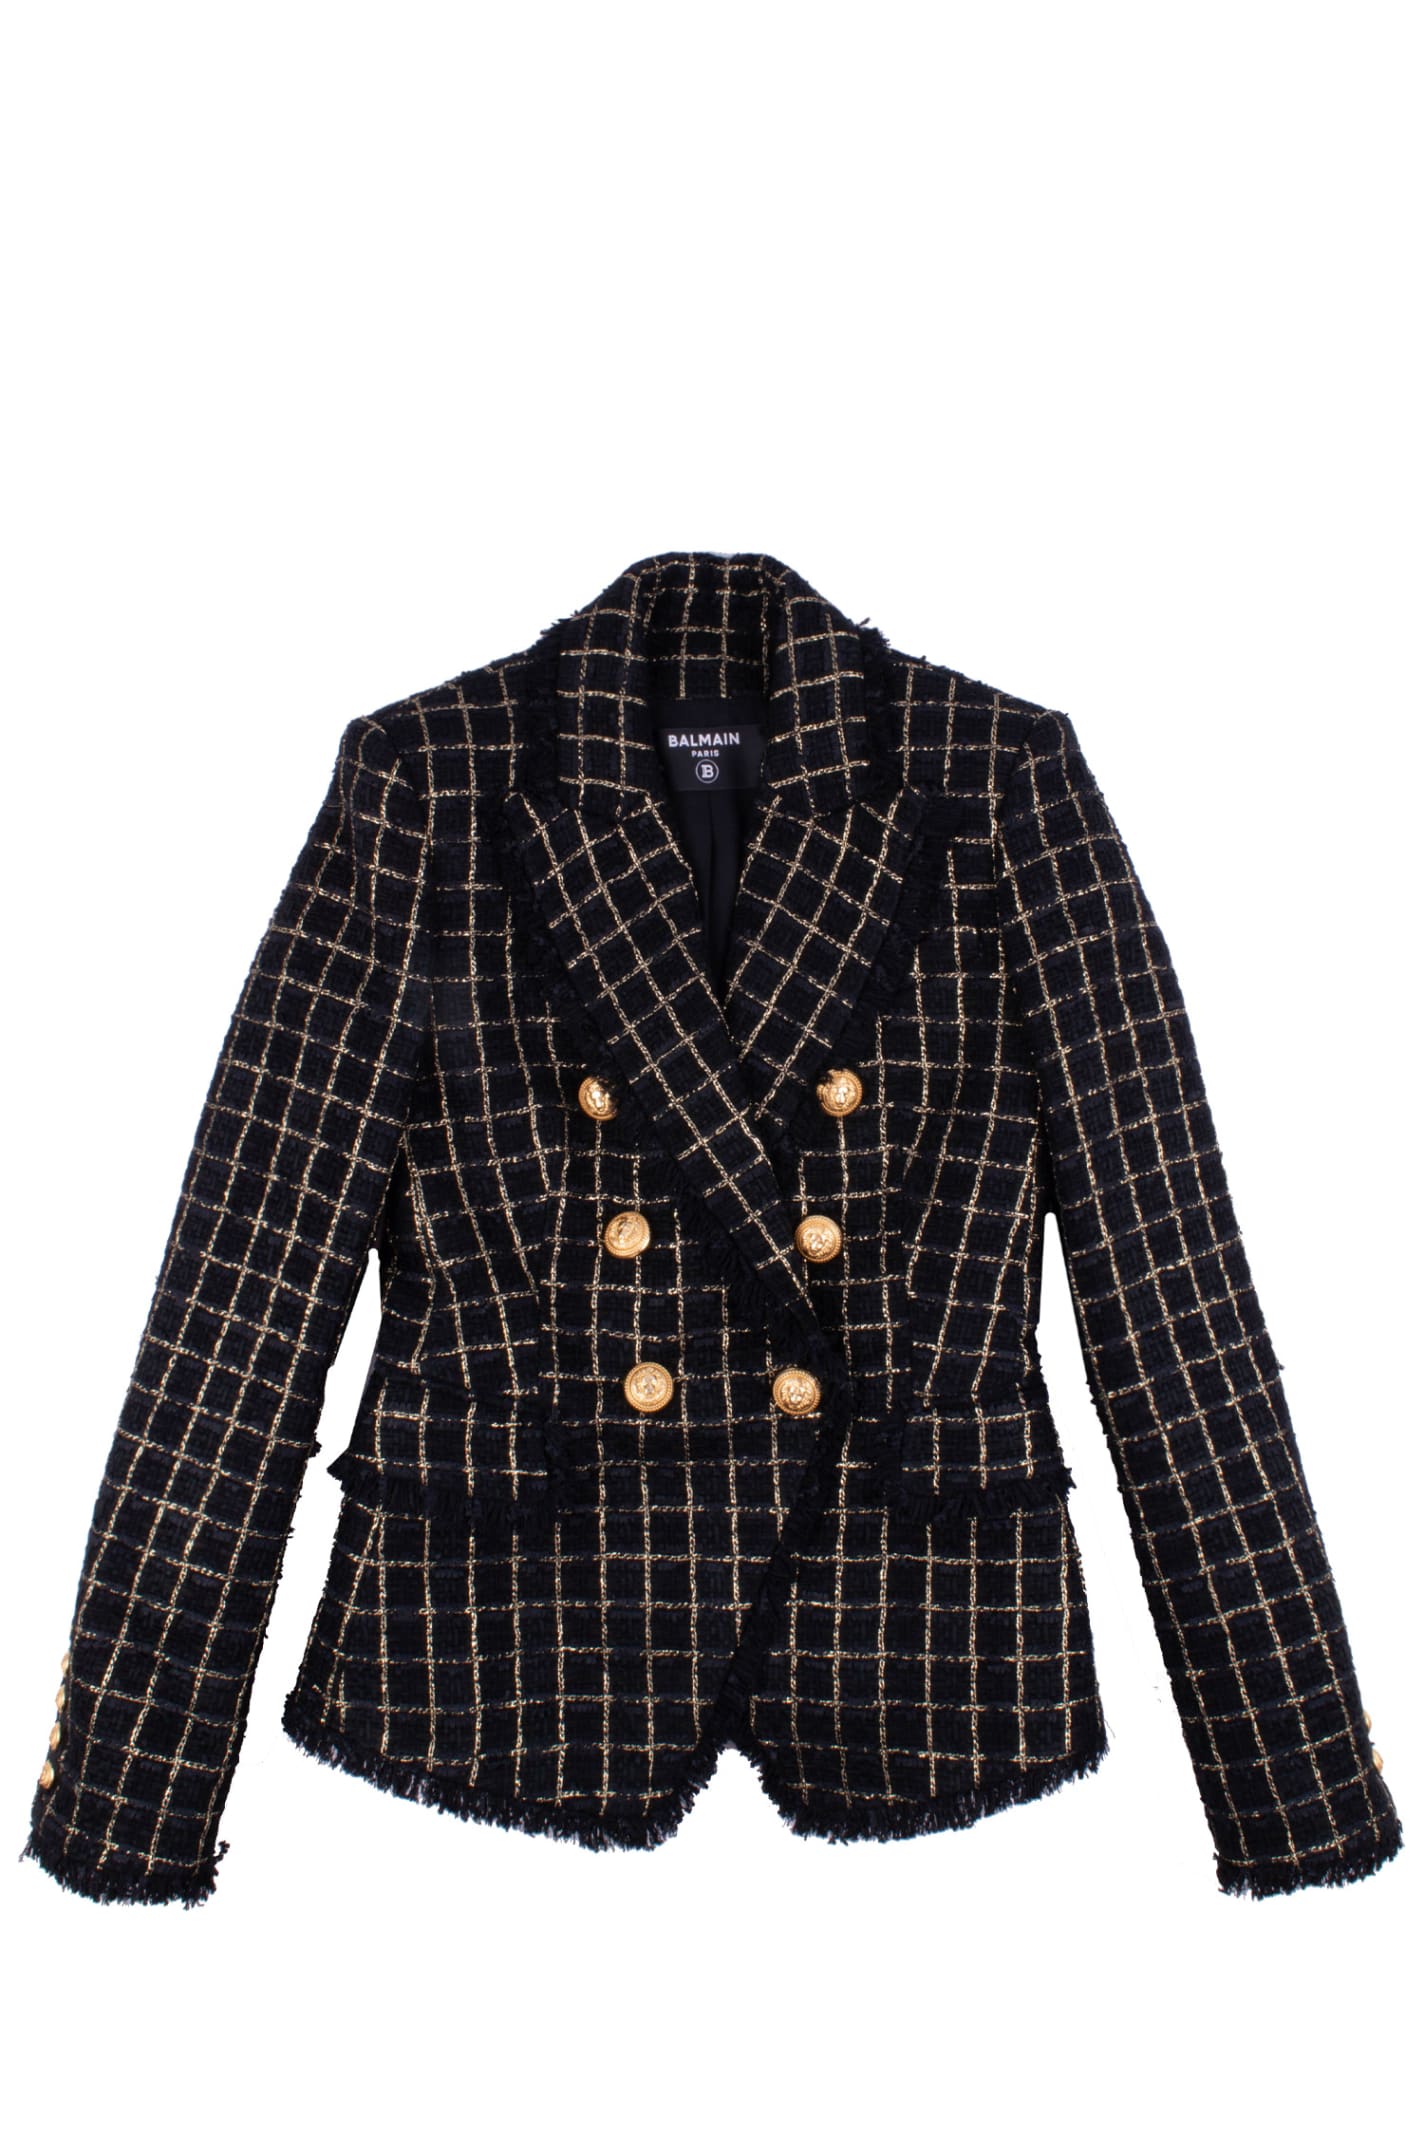 Balmain Jacket With Check Pattern